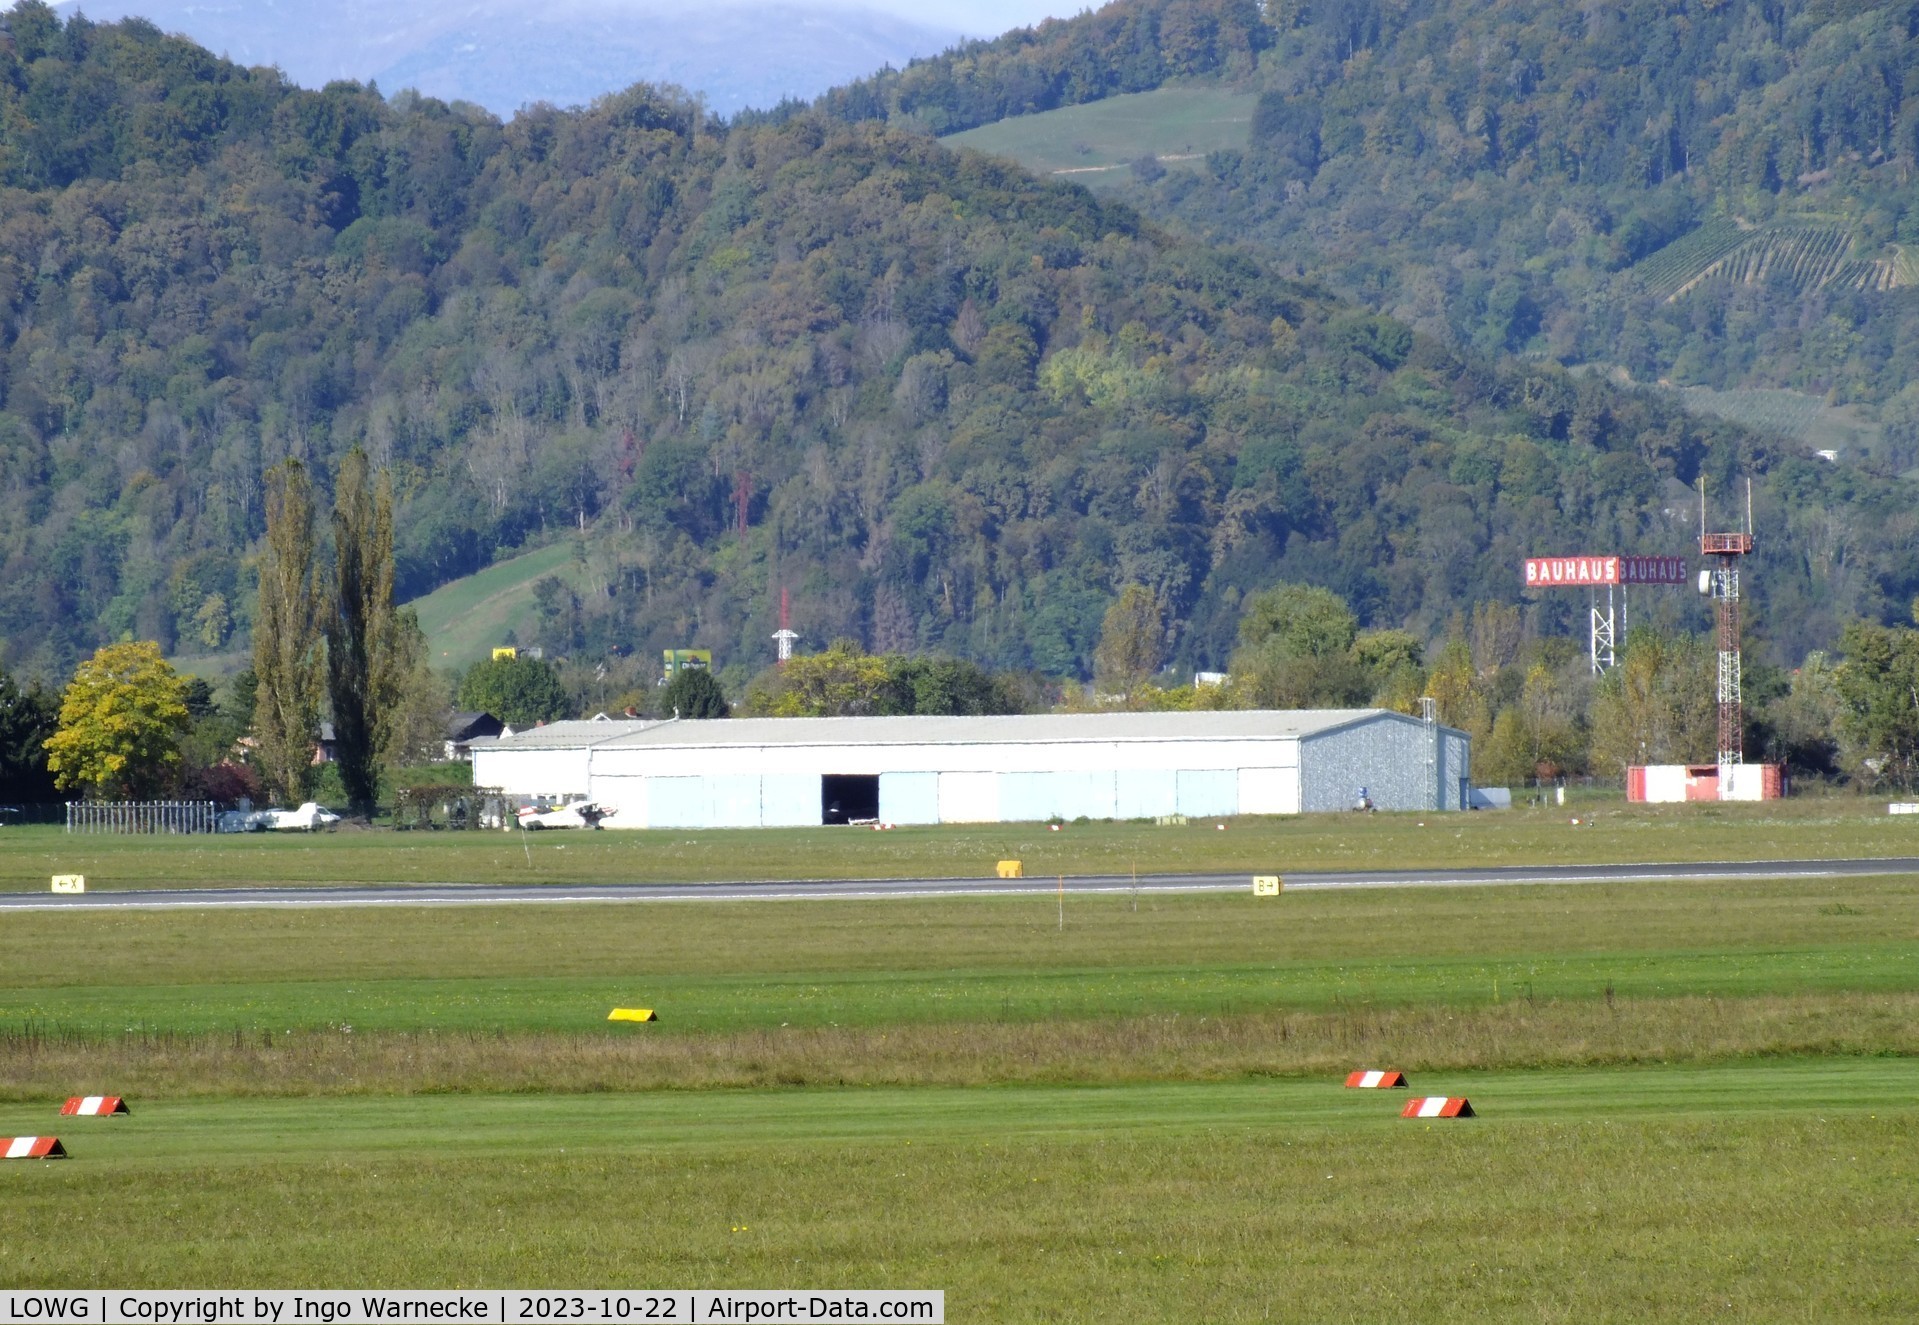 Graz Airport, Graz Austria (LOWG) - hangar on the western side of Graz airport